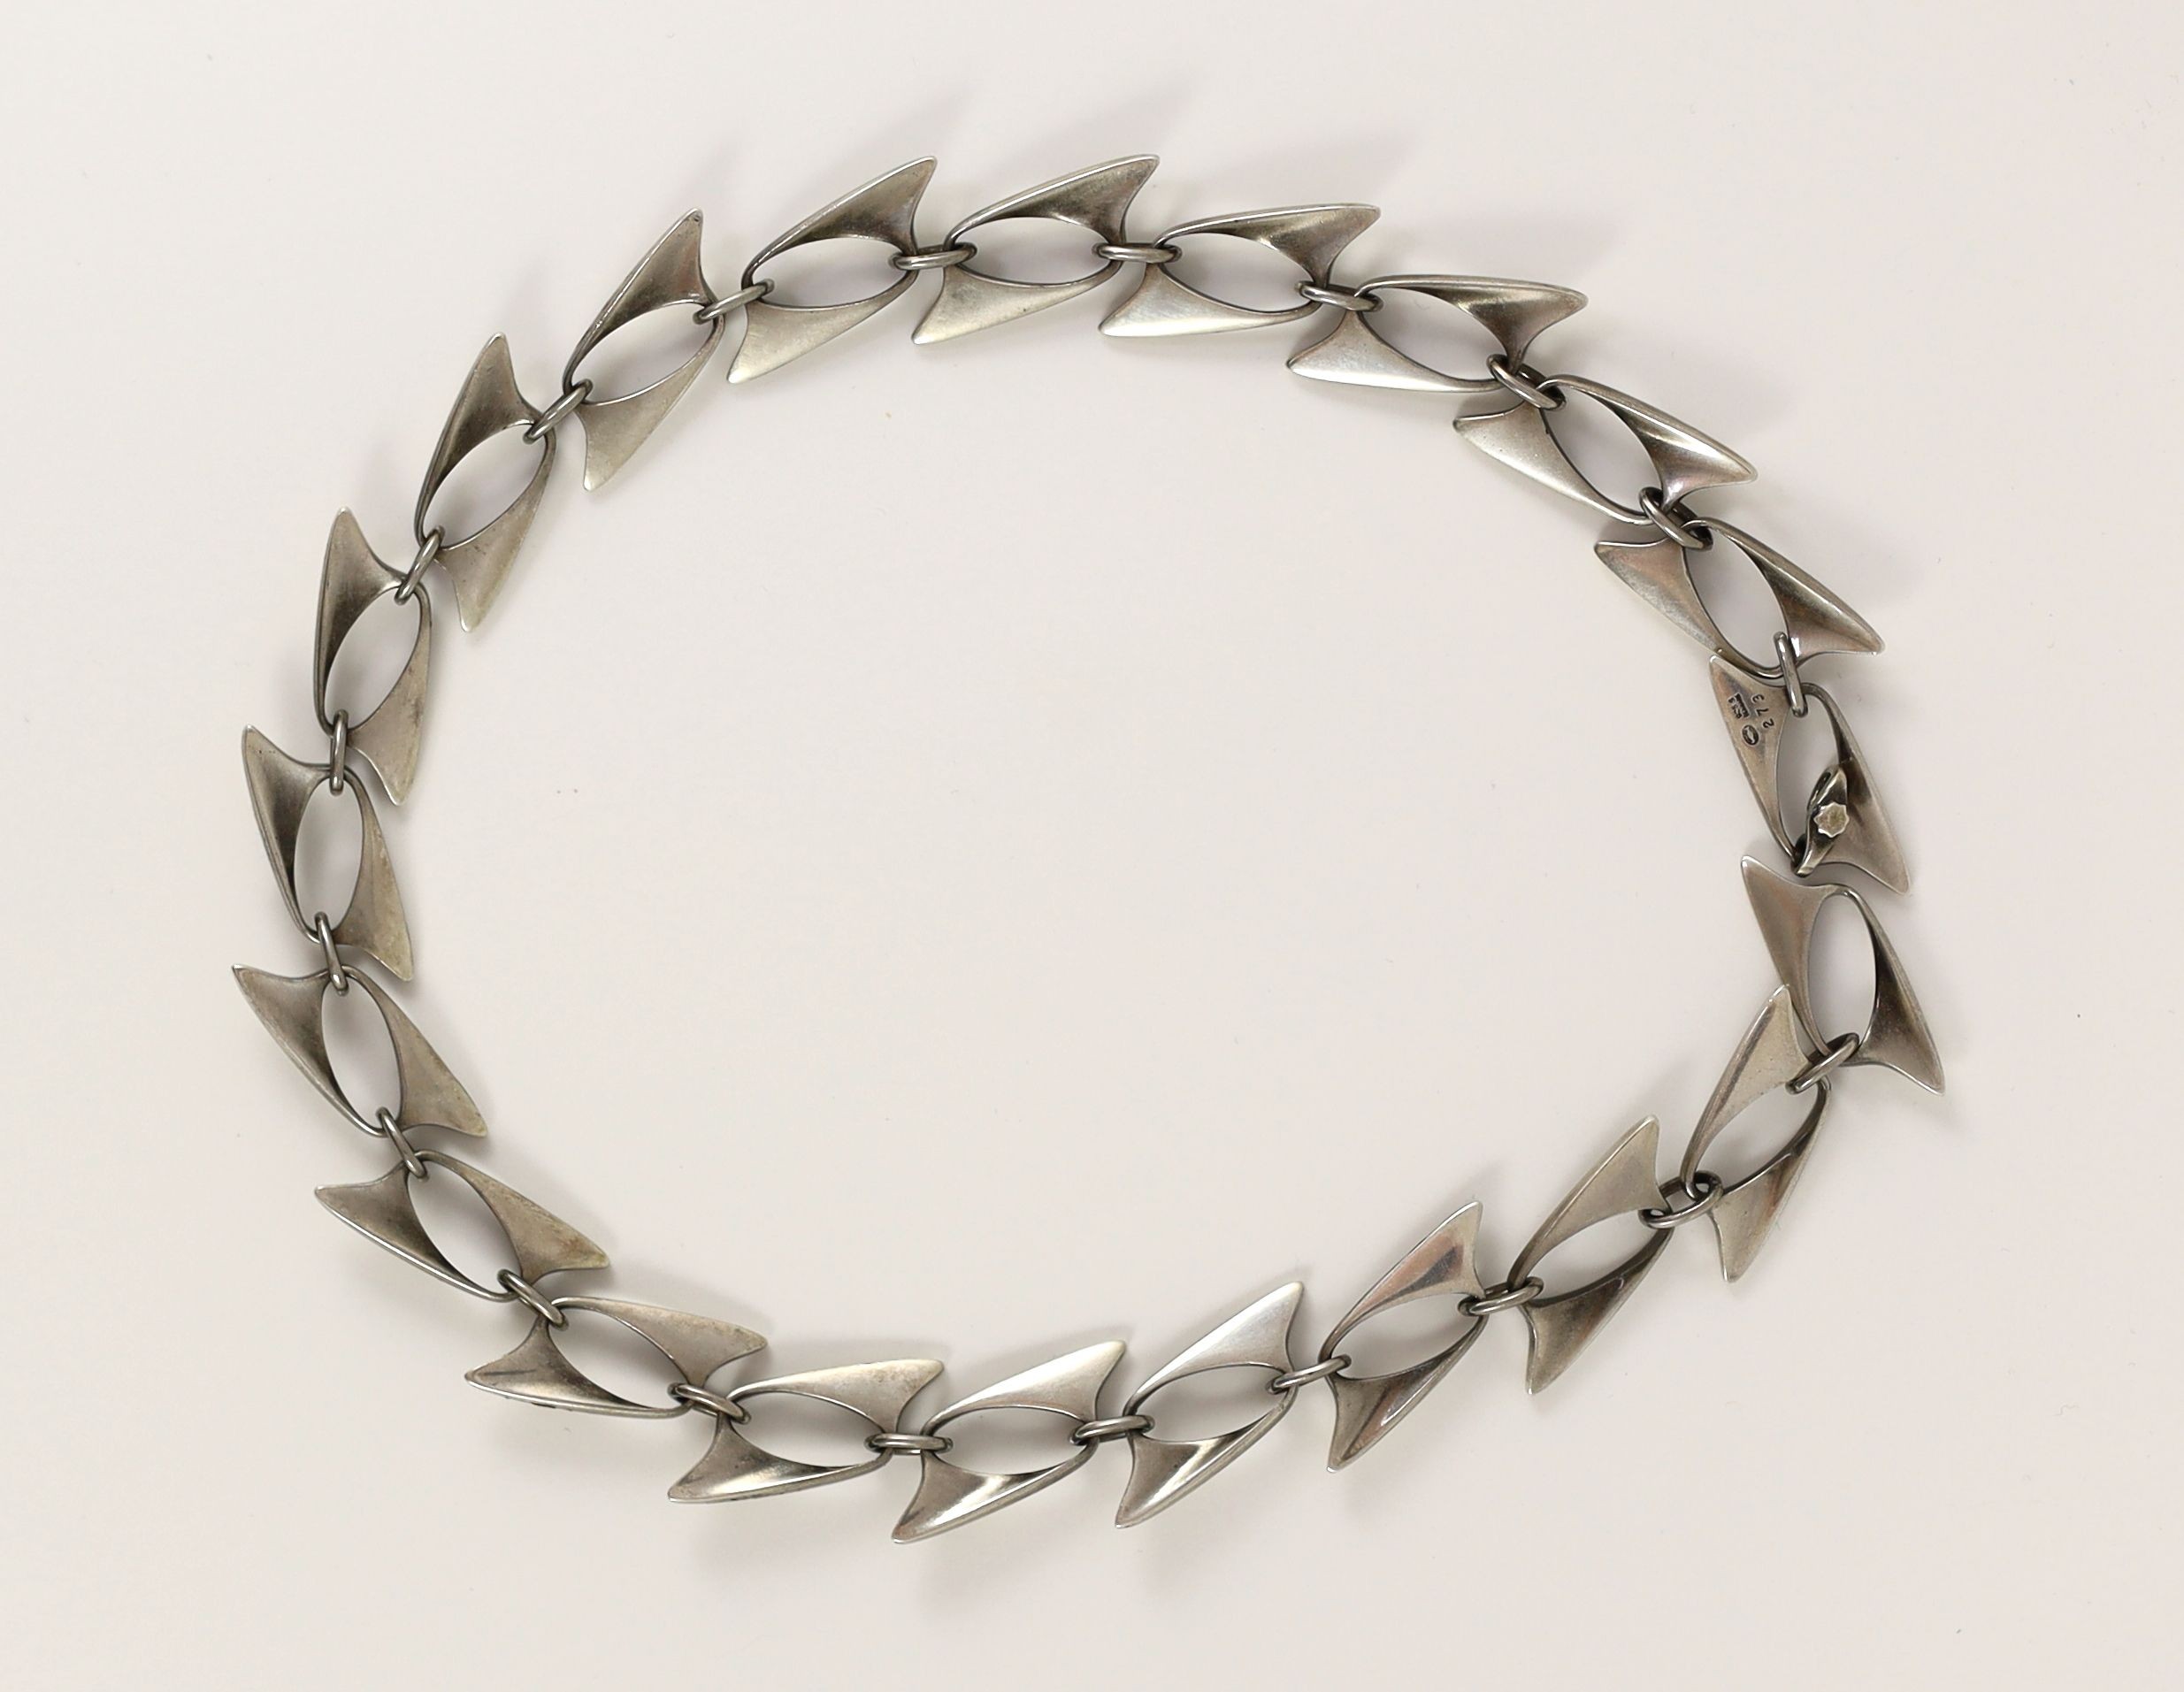 A Georg Jensen sterling silver stylised link necklace, designed by Henning Koppel, no. 273